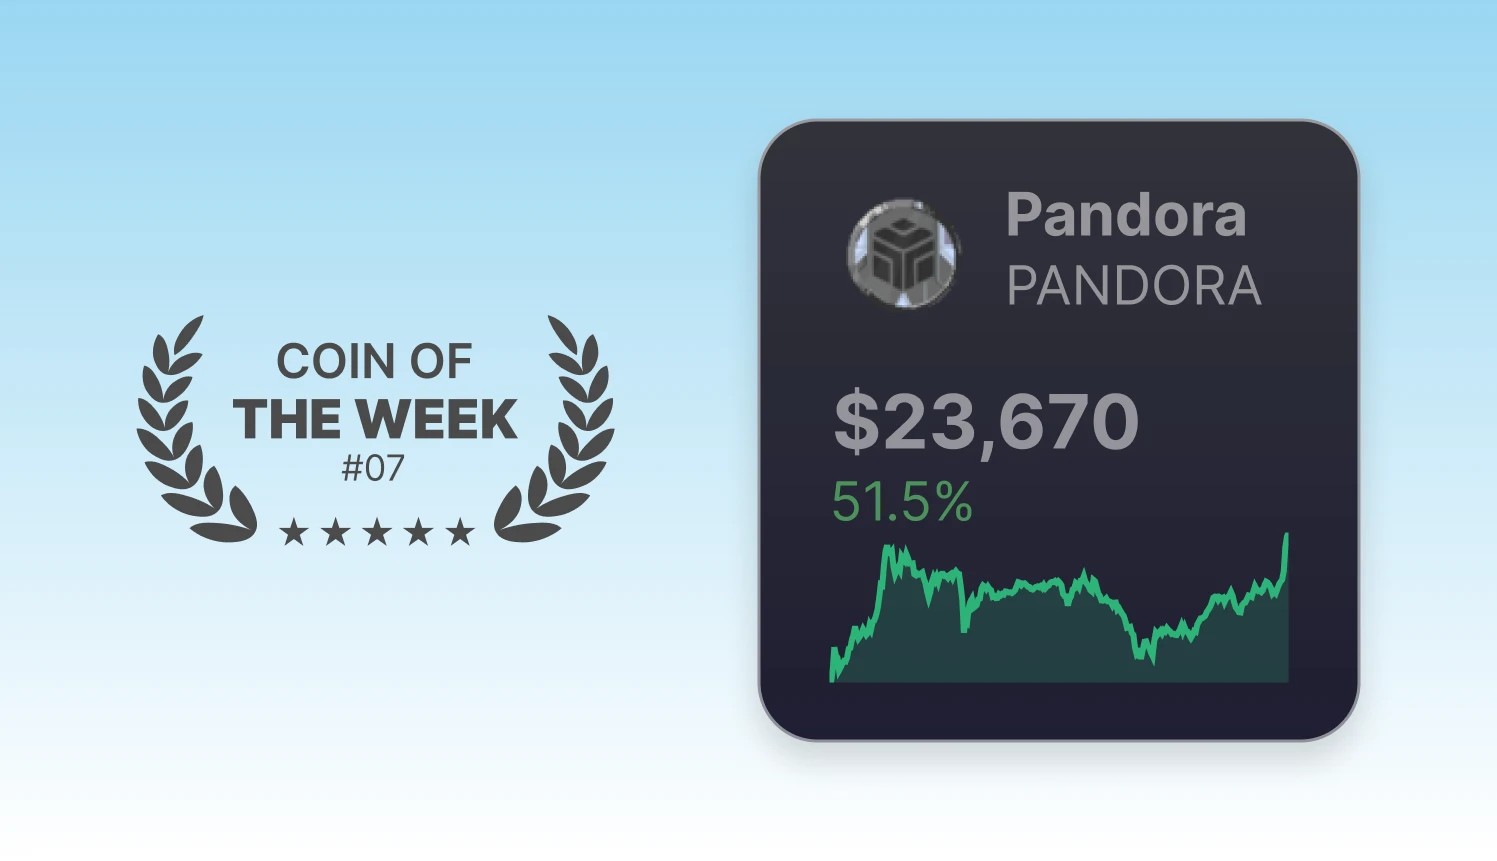 Coin of the Week - PANDORA - Week 07